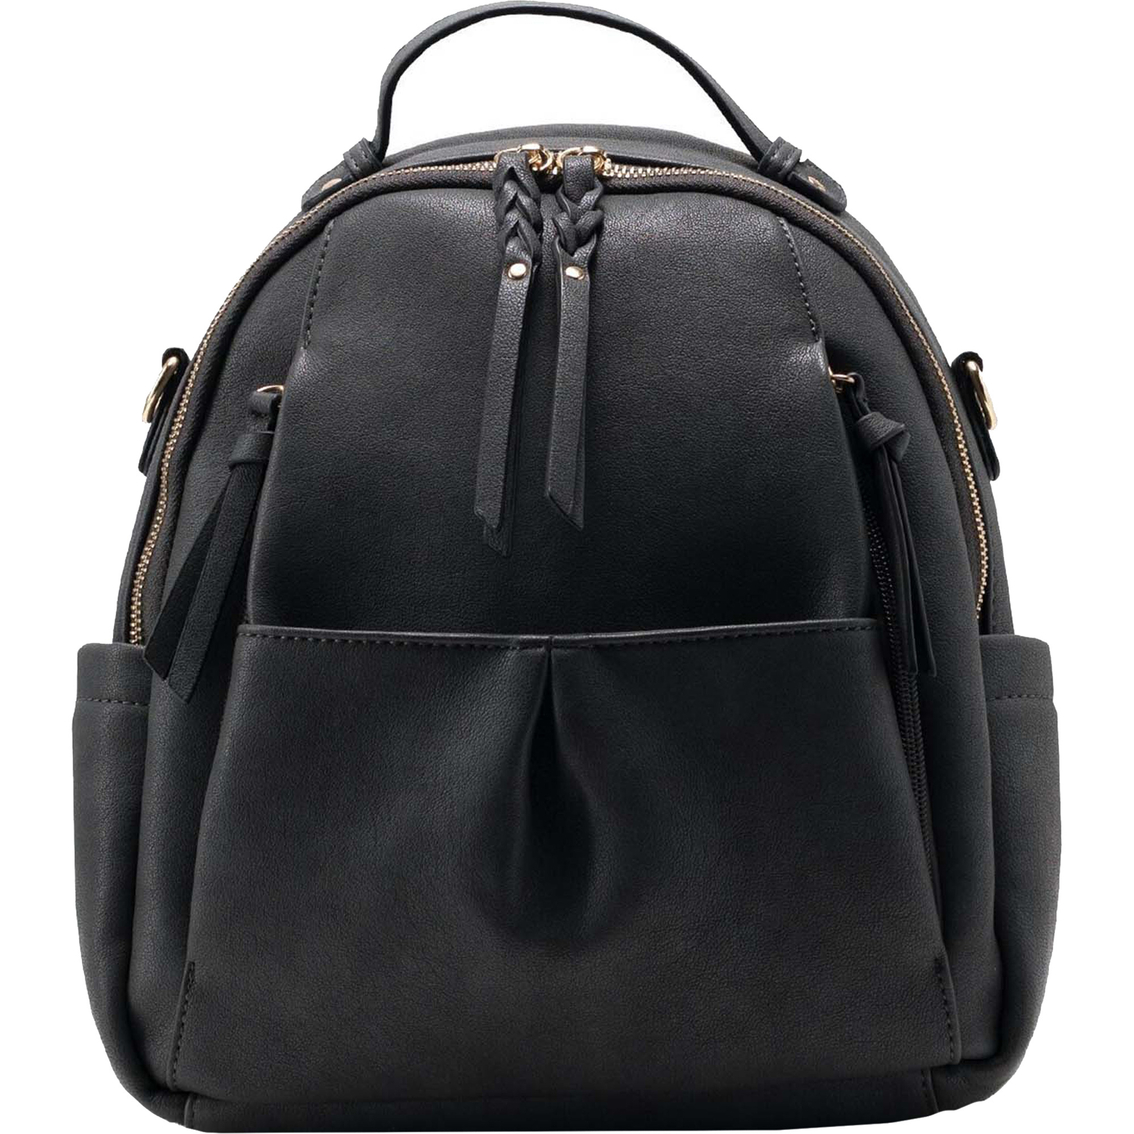 Violet Ray Addi Convertible Messenger Backpack | Backpacks | Clothing ...